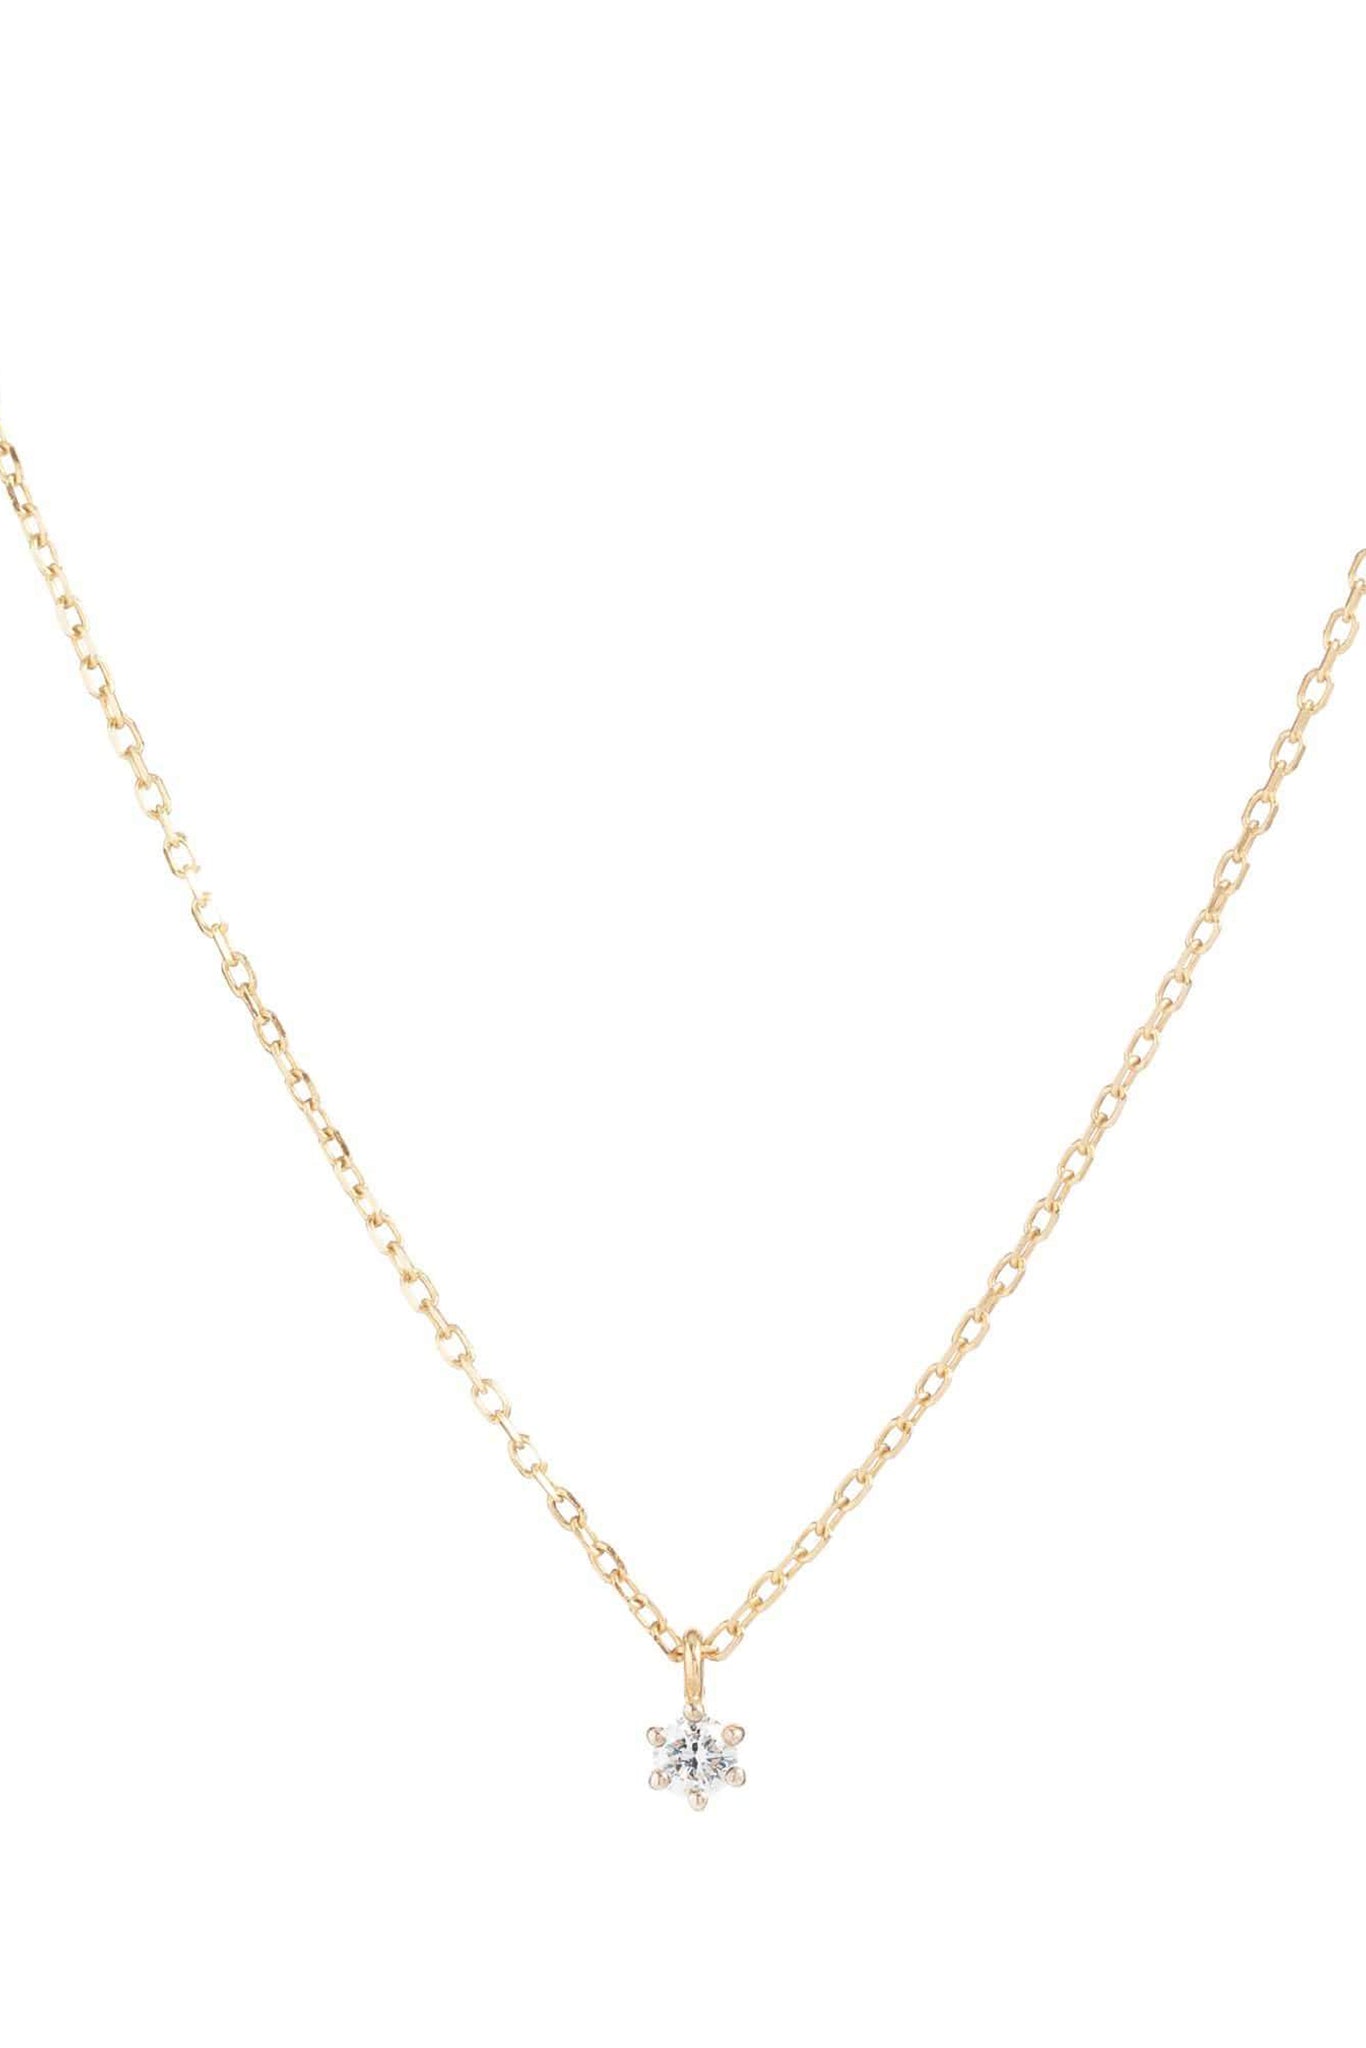 BYC 14k Gold Sweet Droplet Diamond Necklace